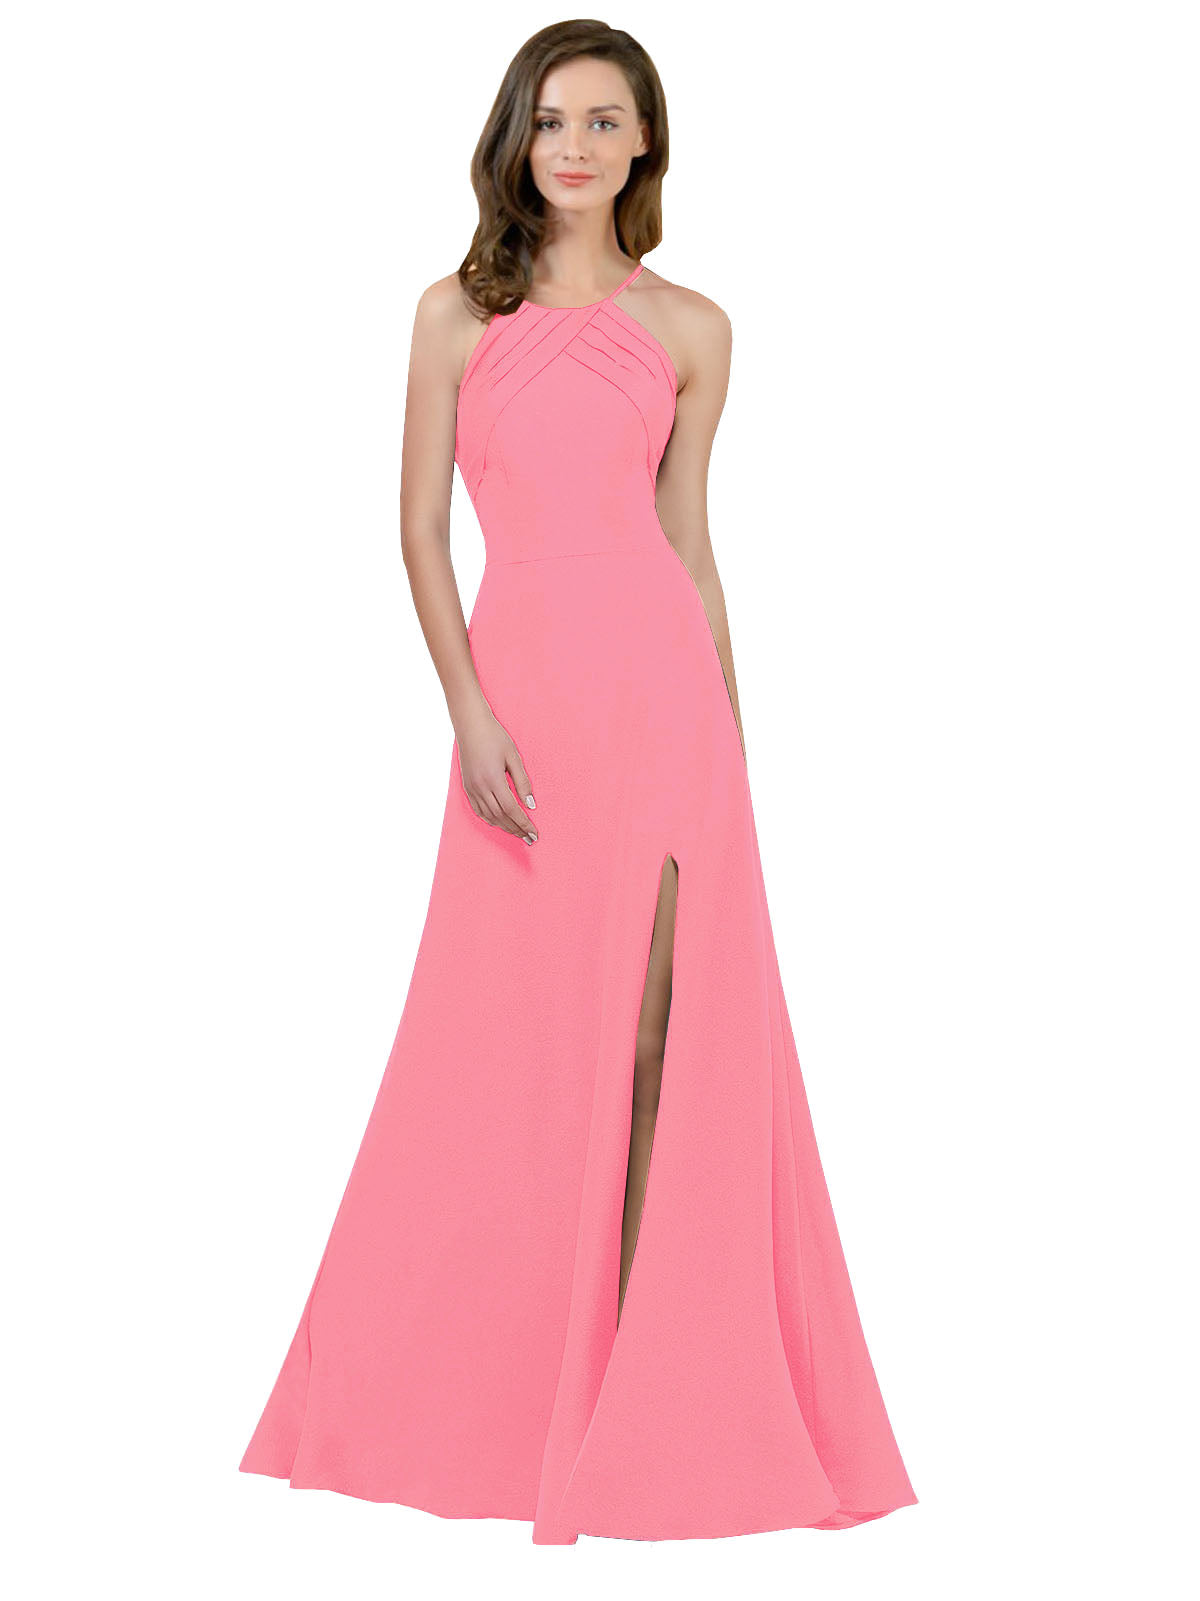 Hot Pink A-Line High Neck Jewel Sleeveless Long Bridesmaid Dress Themi with Keyhole Back